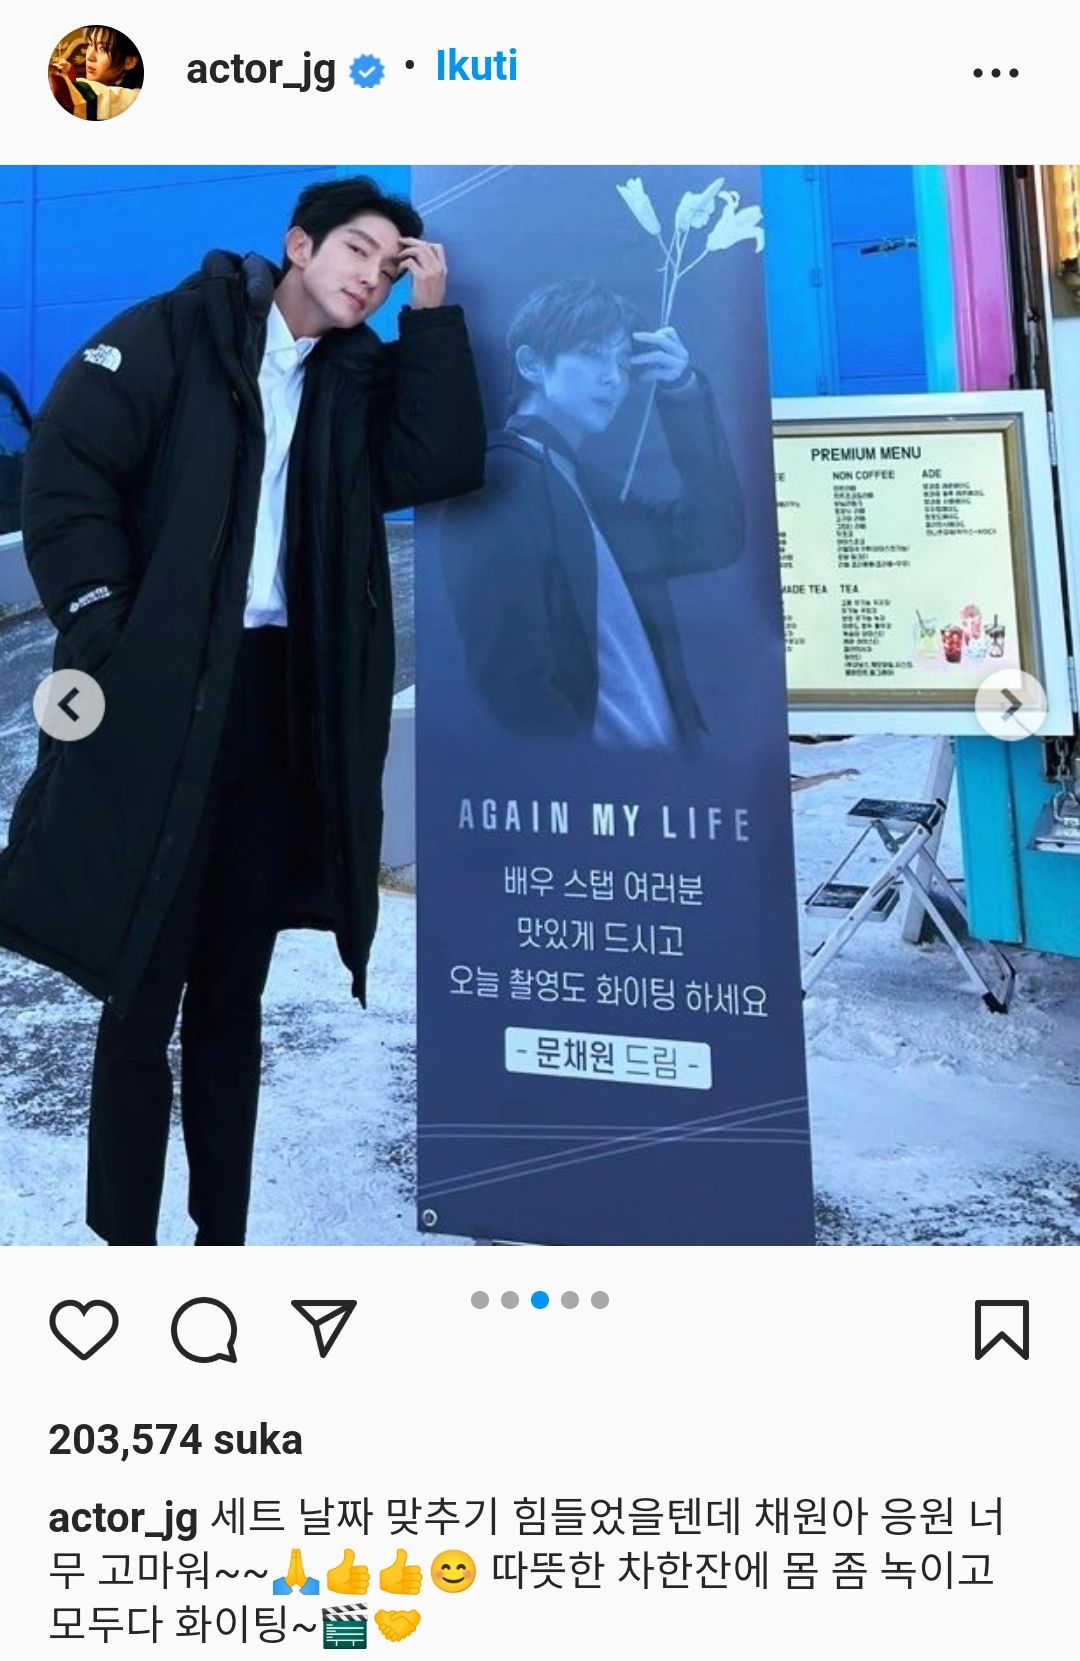 Unggahan Lee Joon Gi di Instagram.